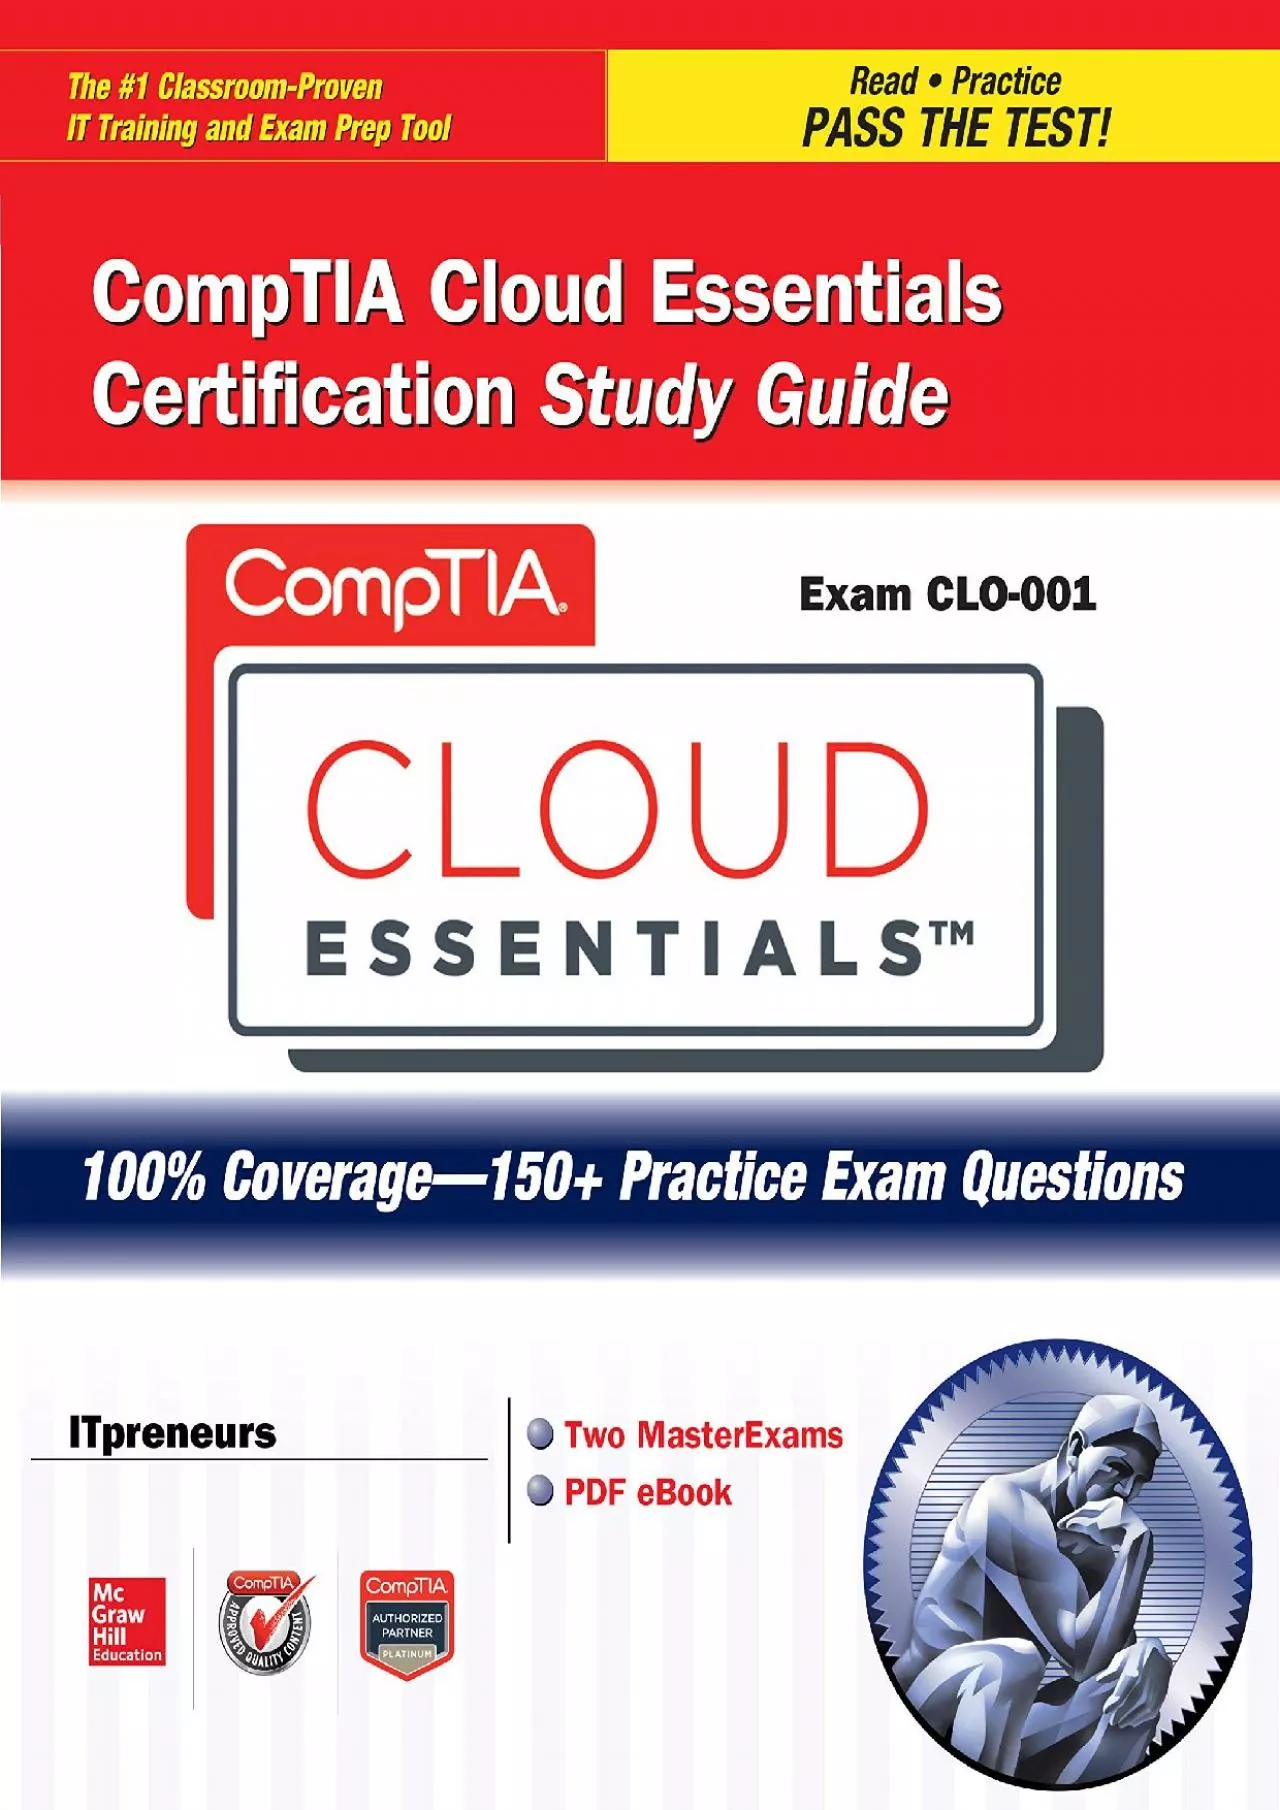 [FREE]-CompTIA Cloud Essentials Certification Study Guide (Exam CLO-001) (Certification